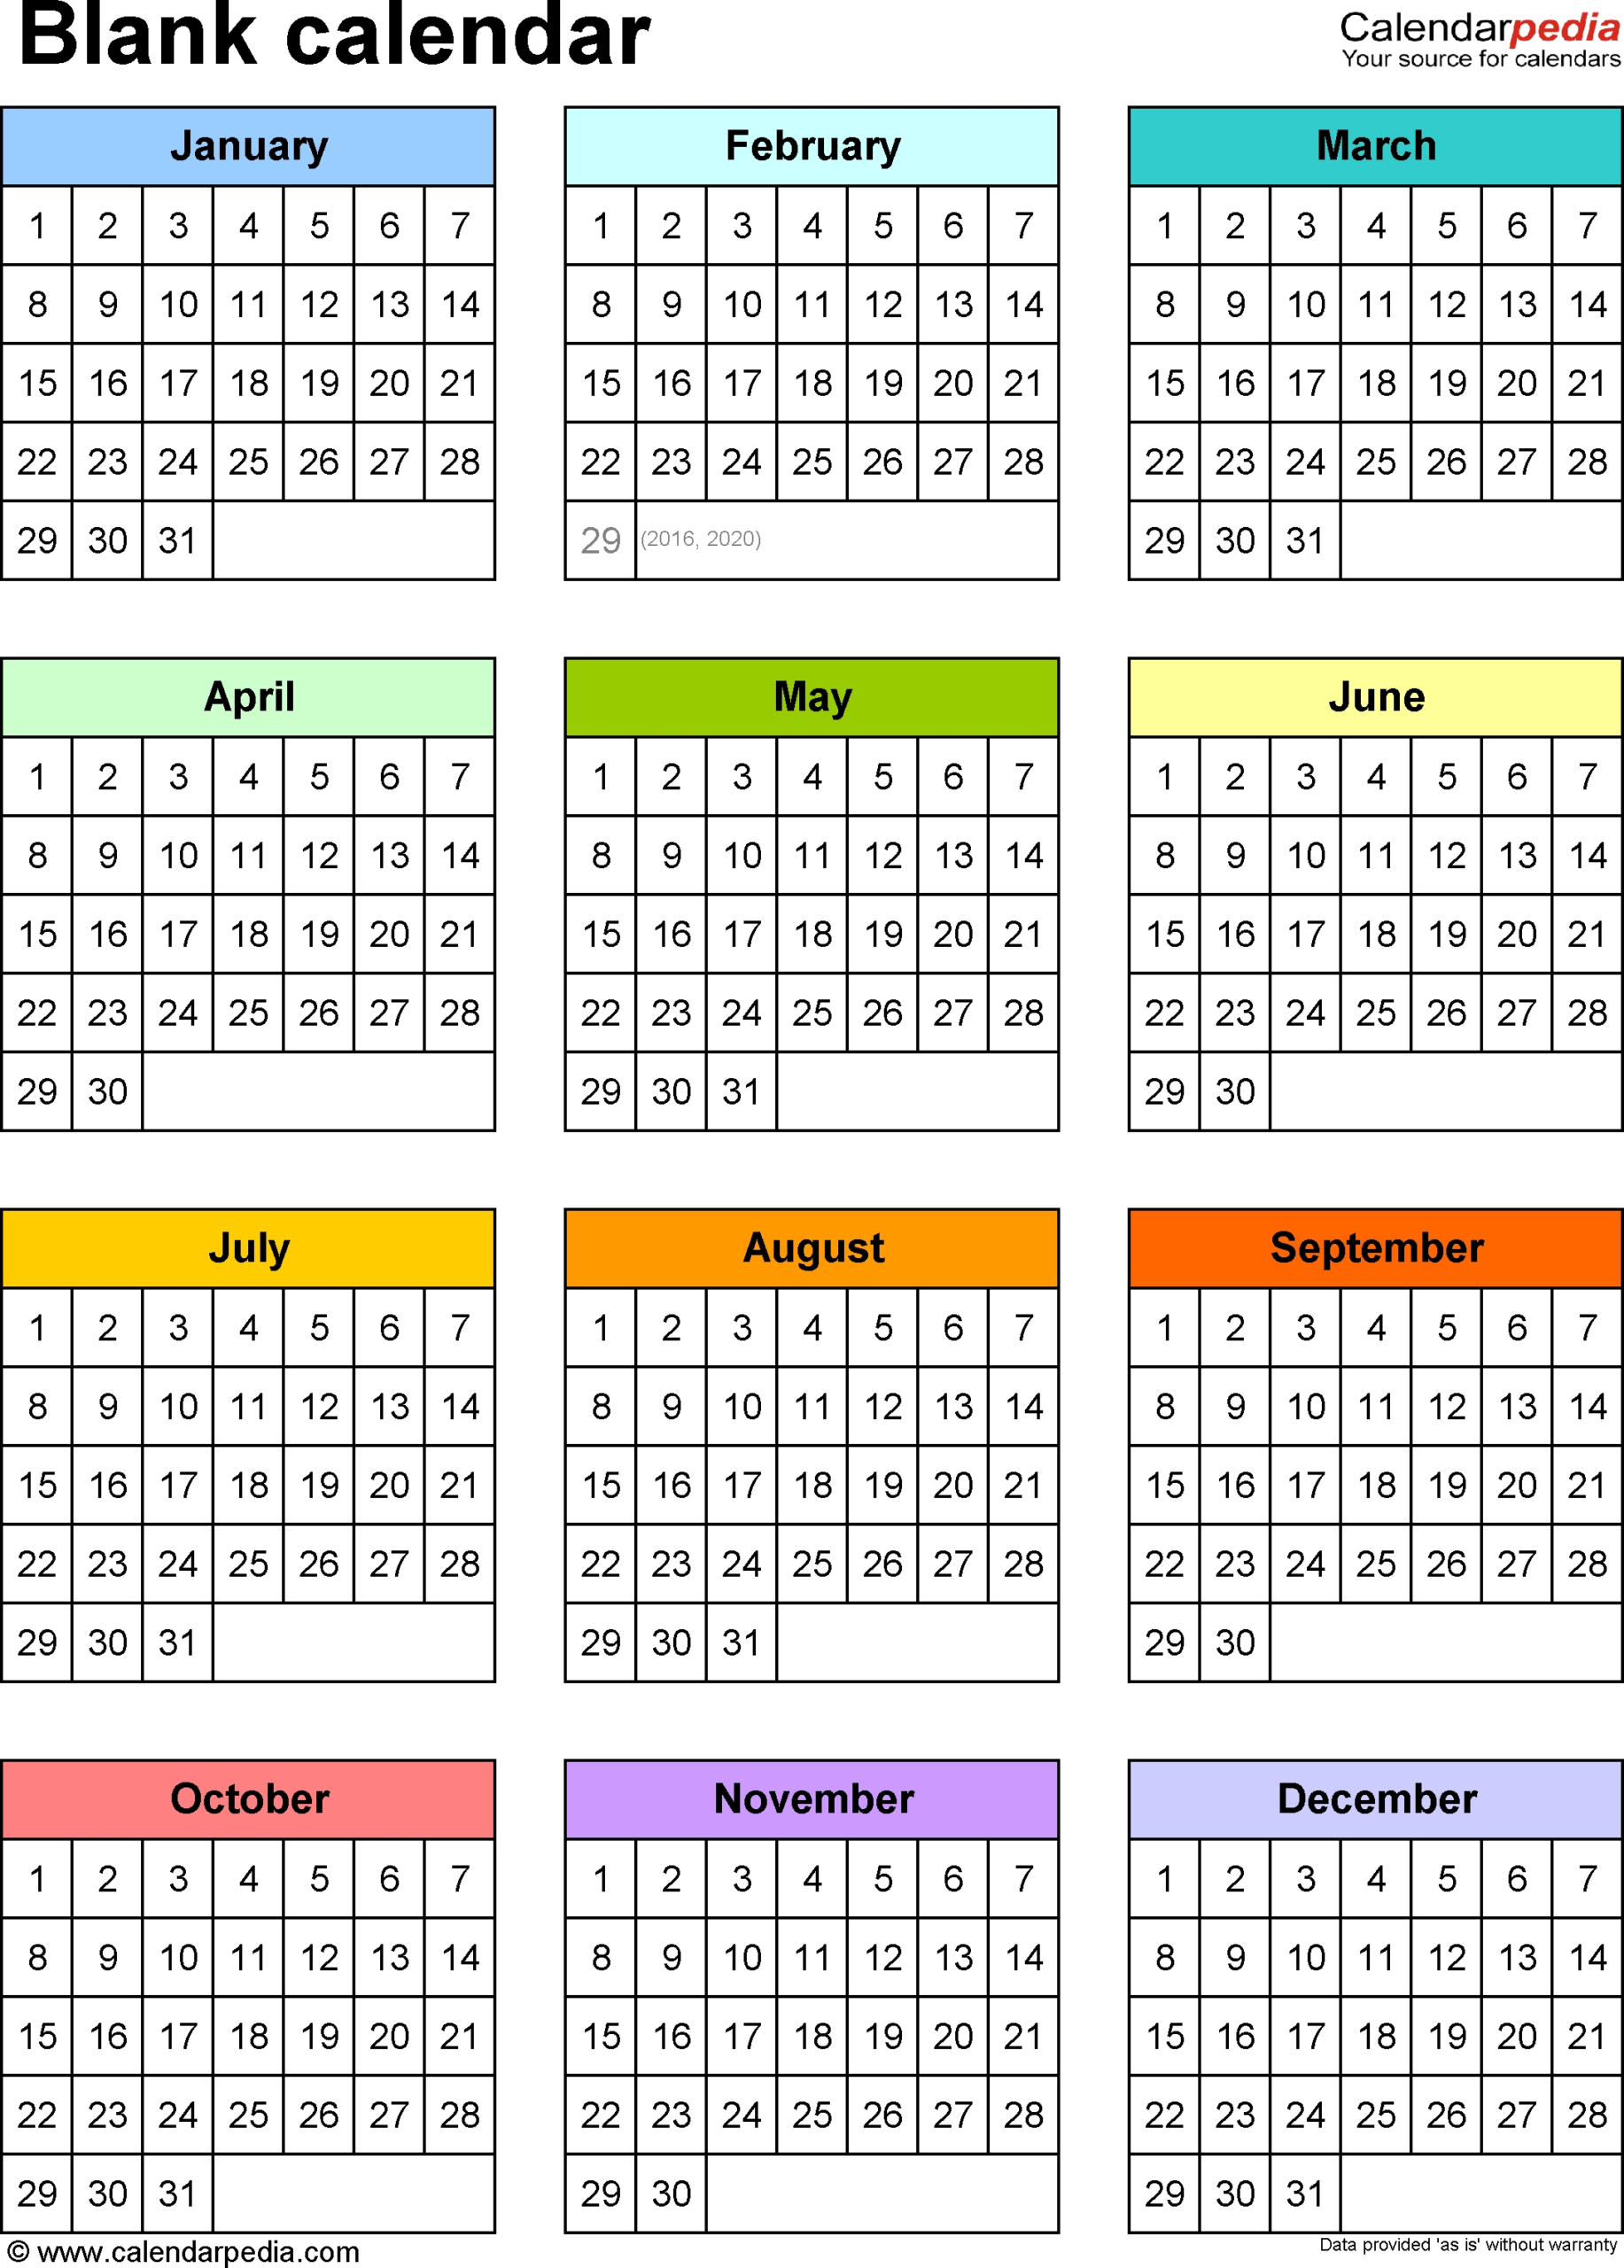 Calendar Template Year At A Glance  Calendar Inspiration within Blank Calendar Word Template